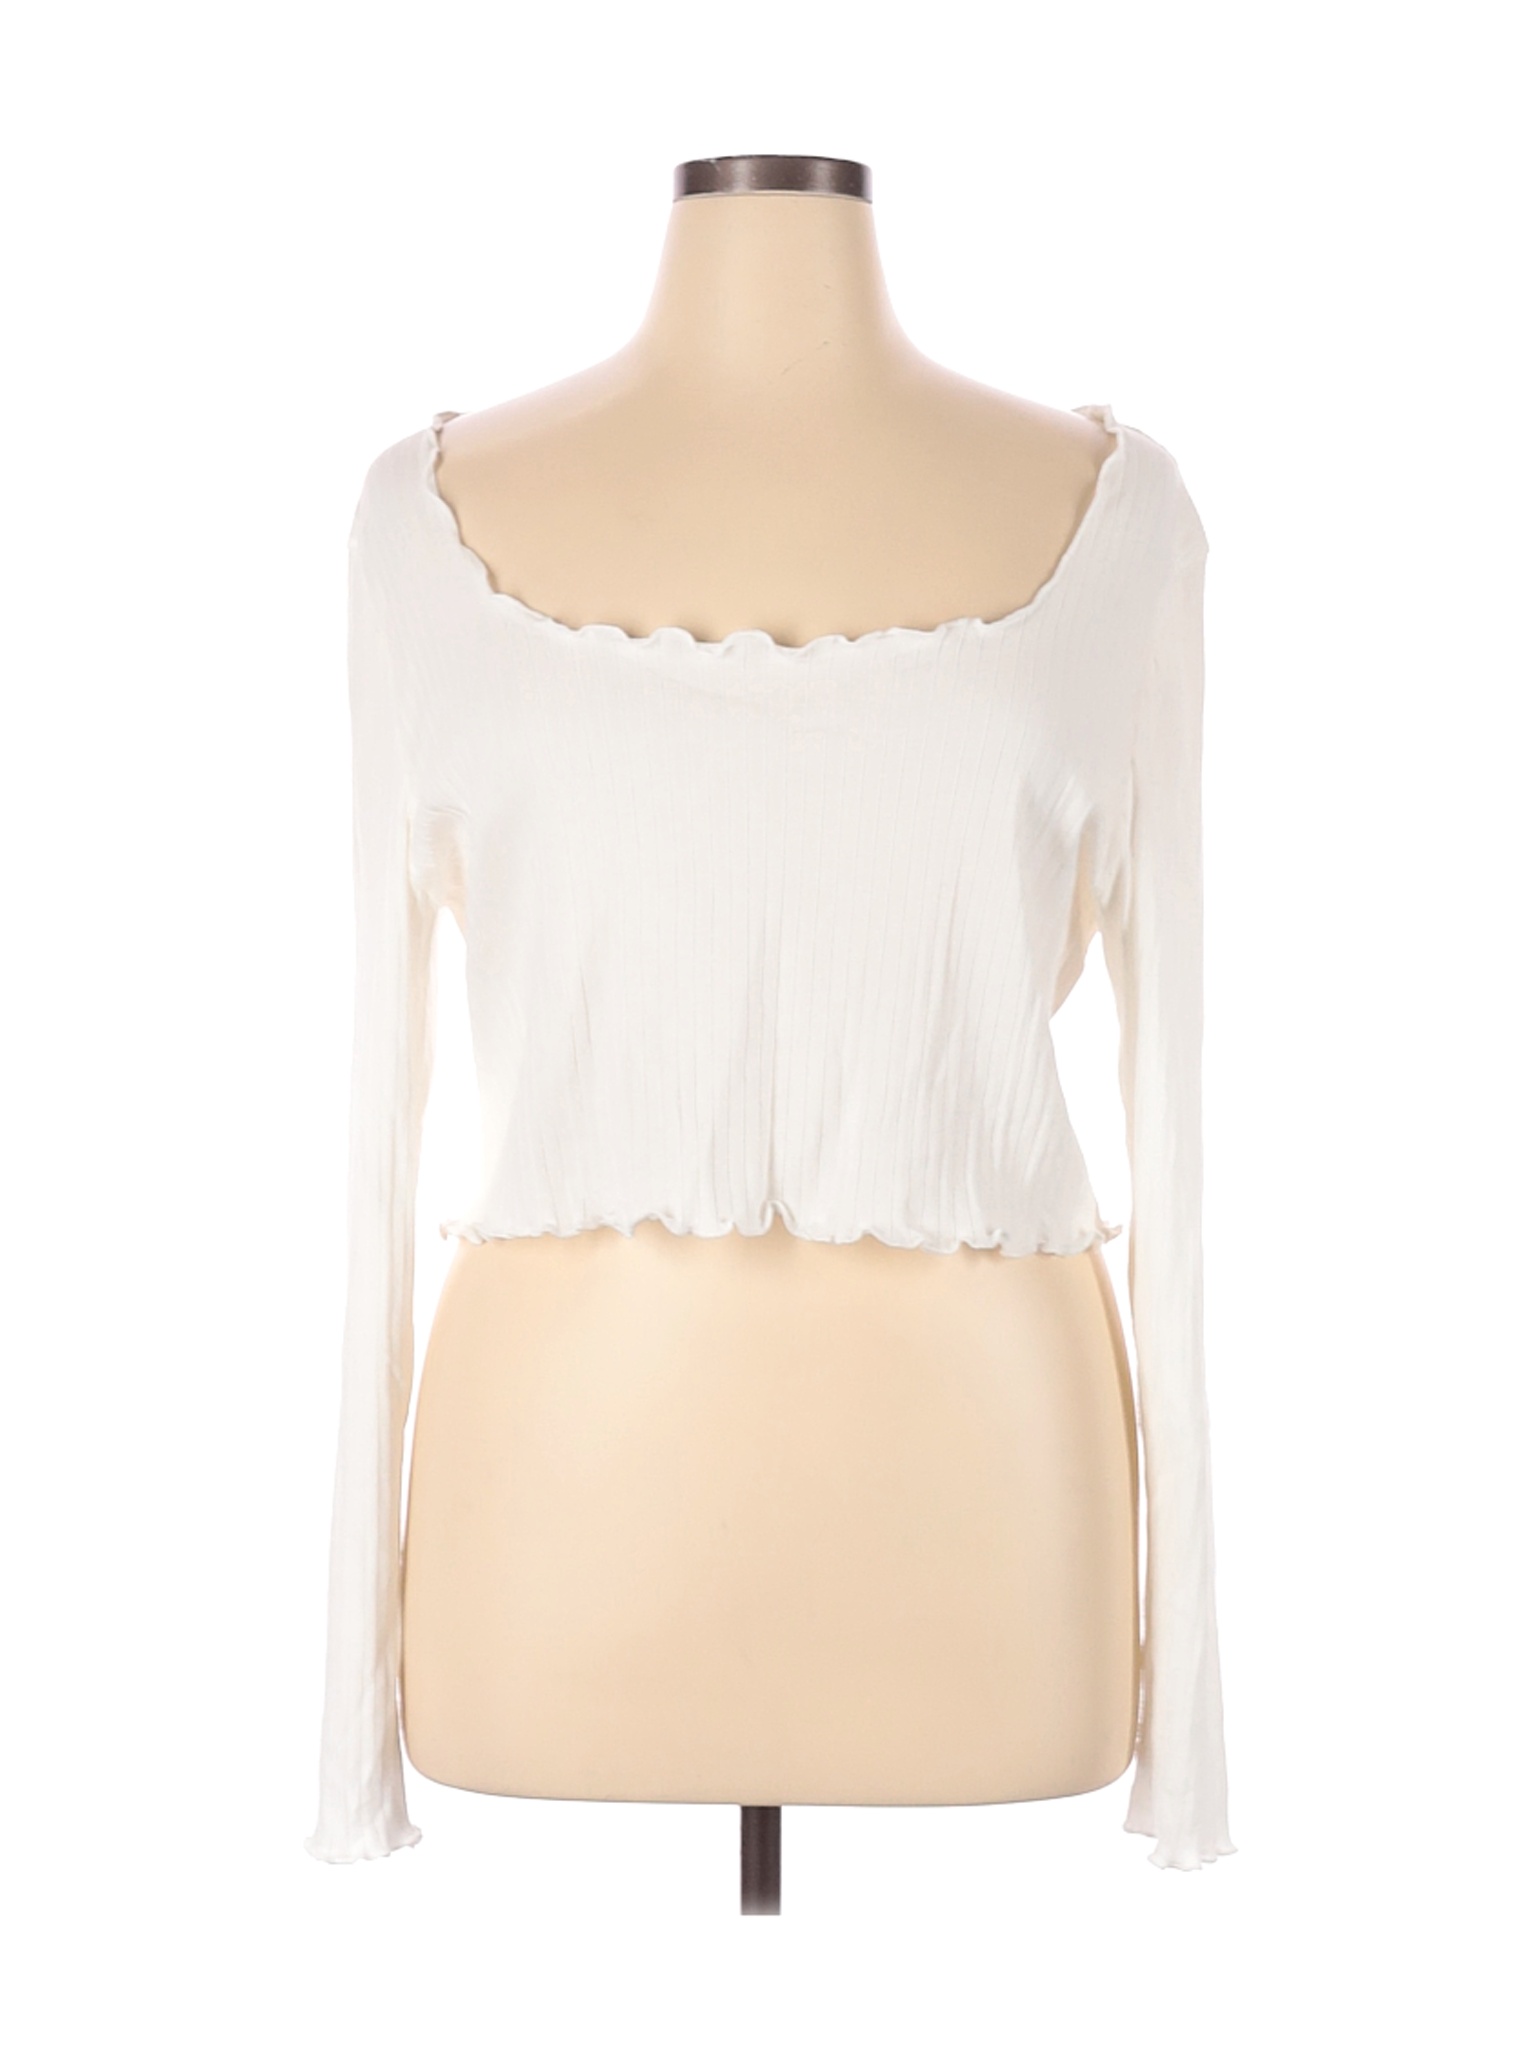 Shein Women White Long Sleeve Top 1X Plus | eBay